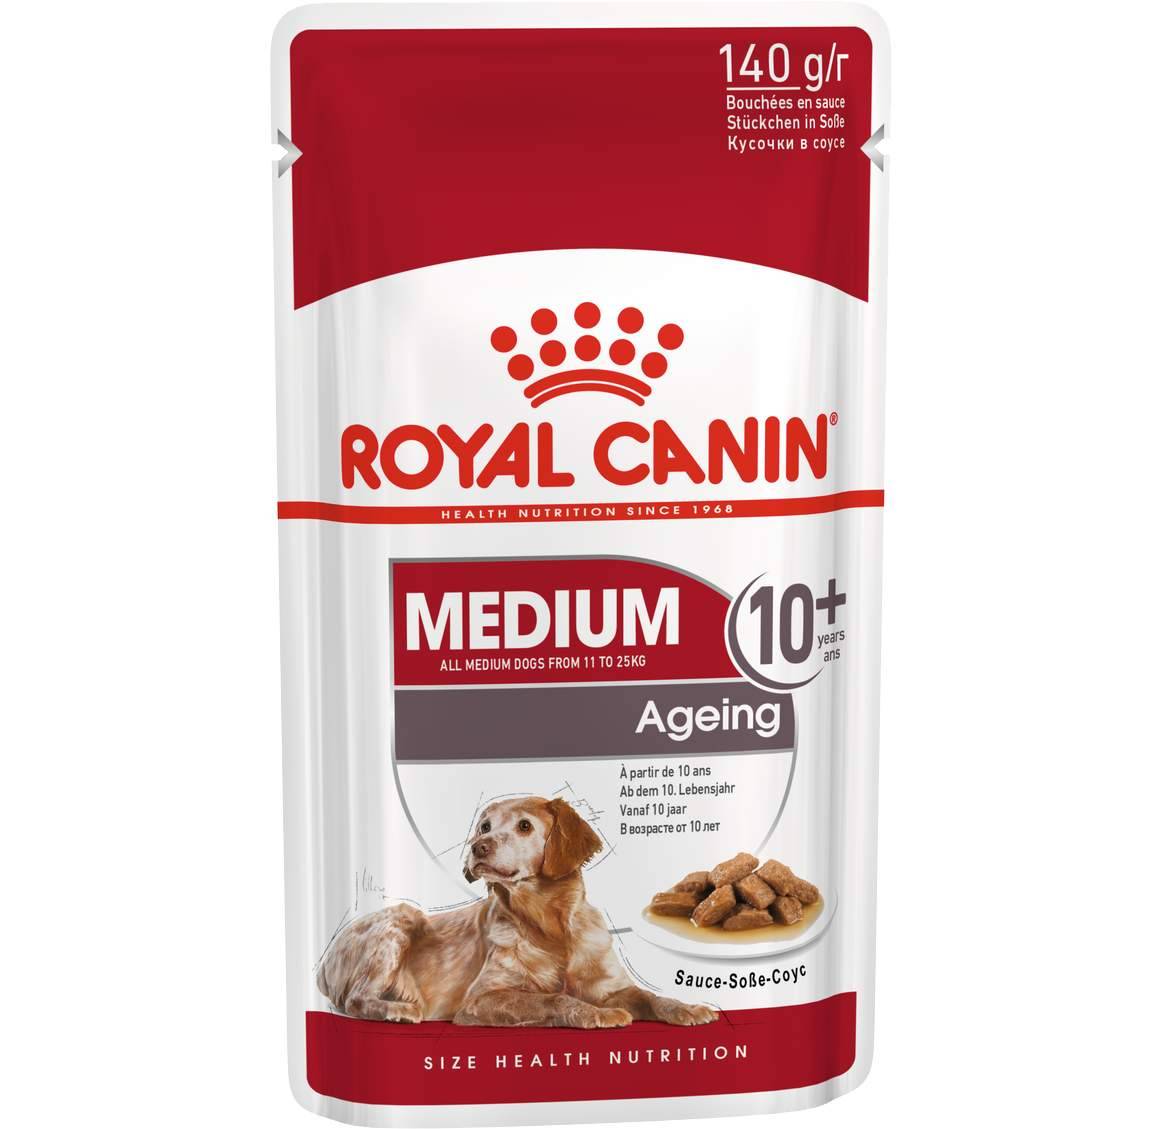 Royal canin – корм премиум класса от французского производителя